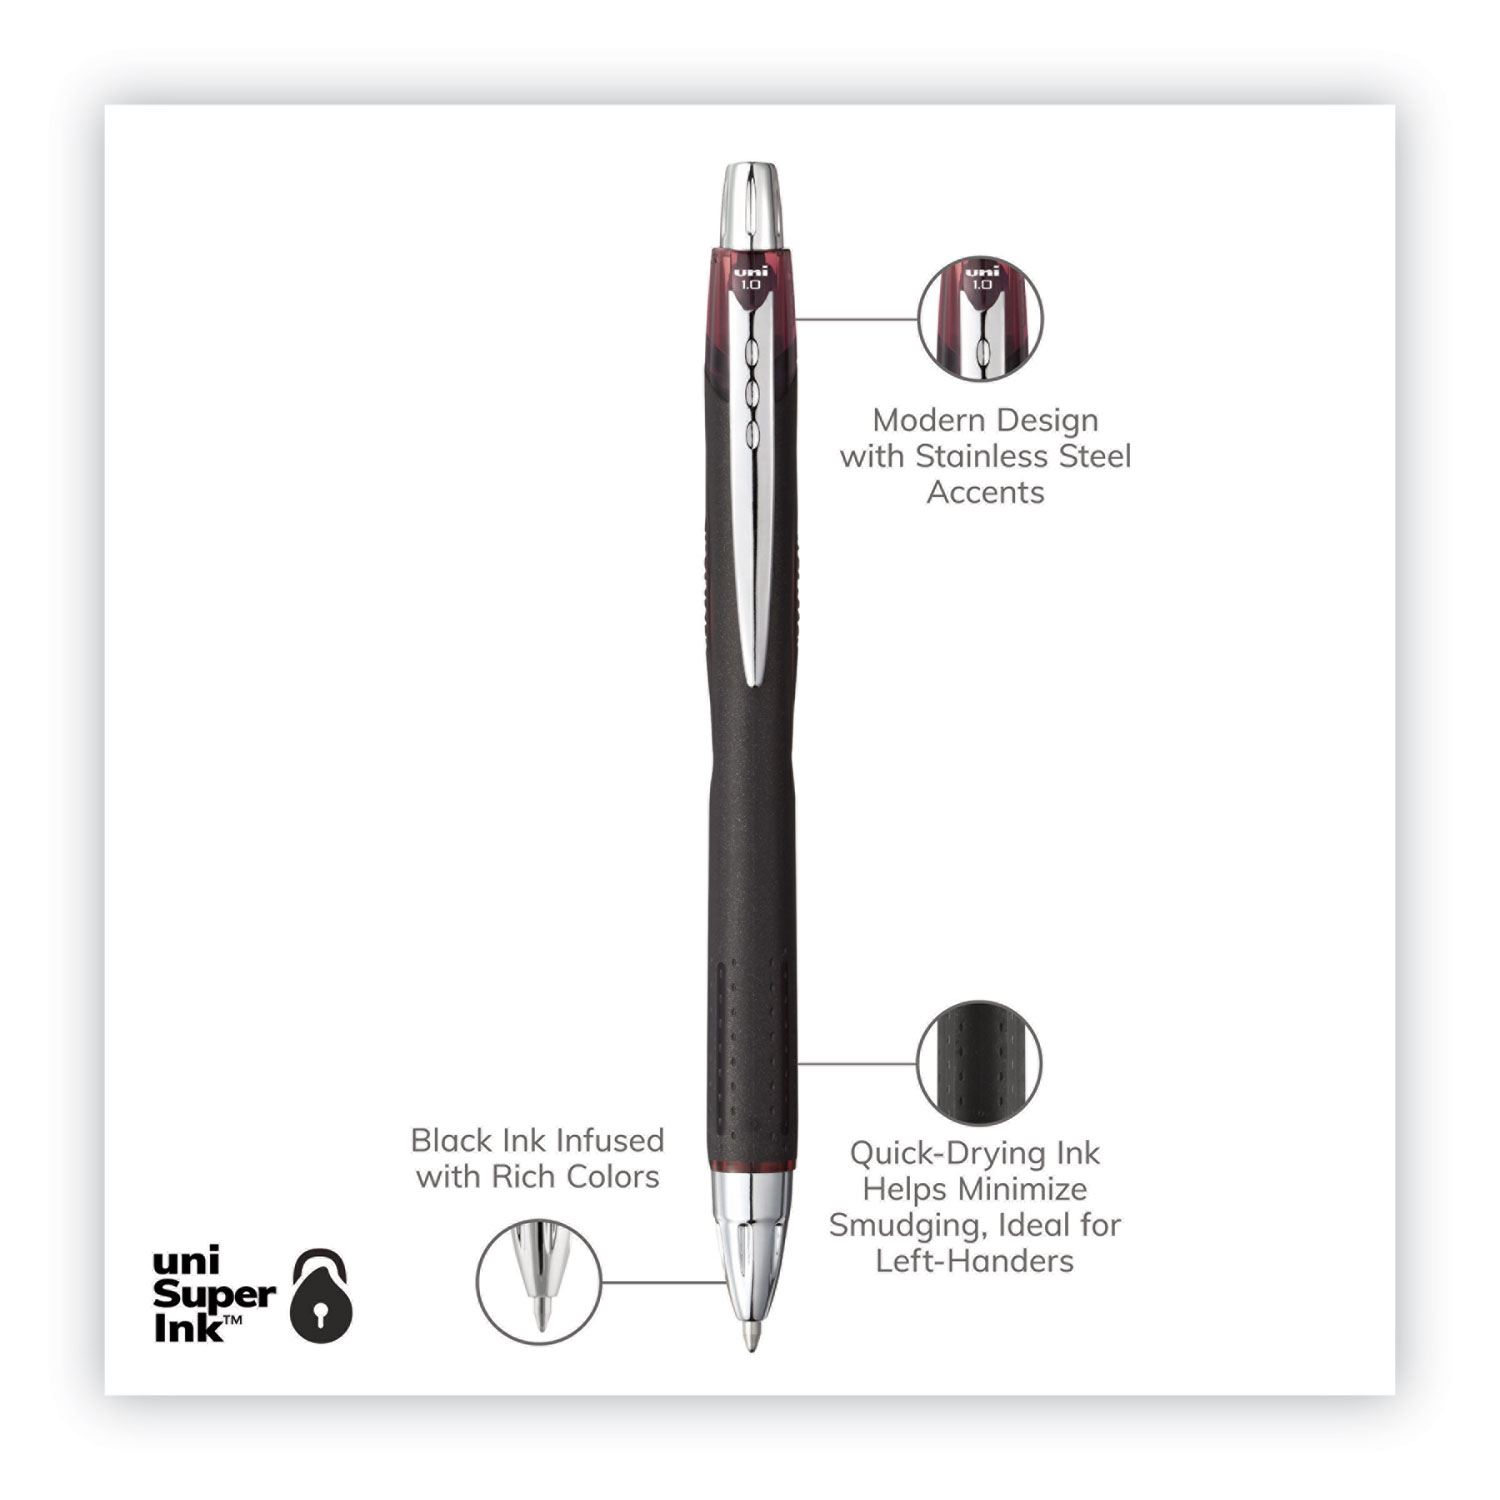 Uni-Ball Power Tank RT Retractable Ballpoint Pen, 1mm, Black Ink, Smoke/Black Barrel, Dozen